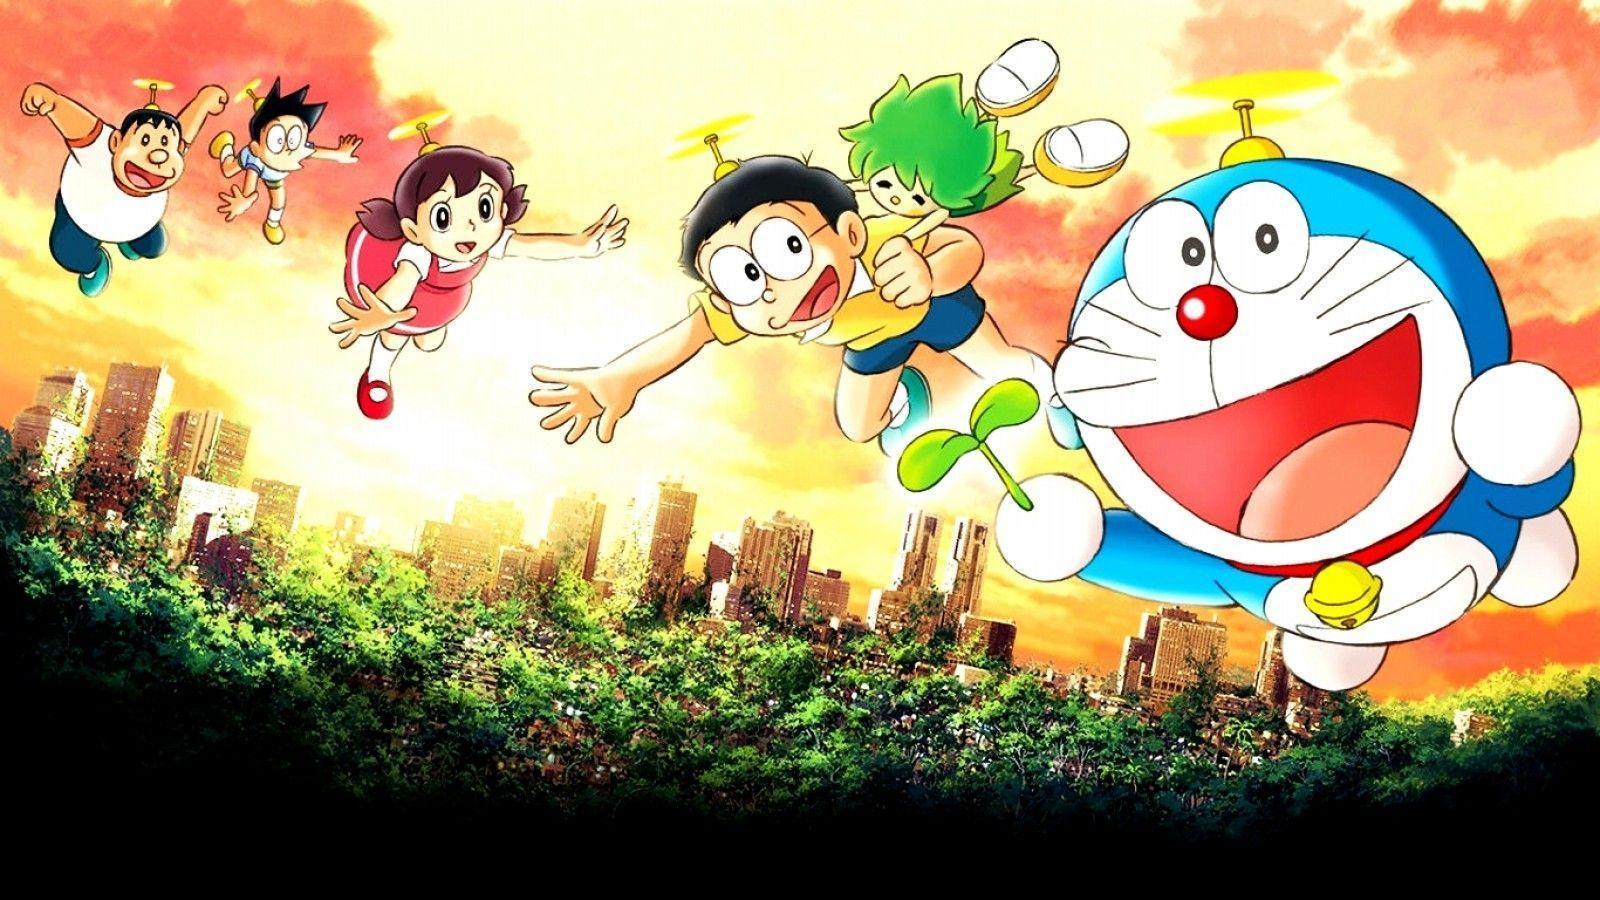 Doraemon And Friends Wallpaper 2015